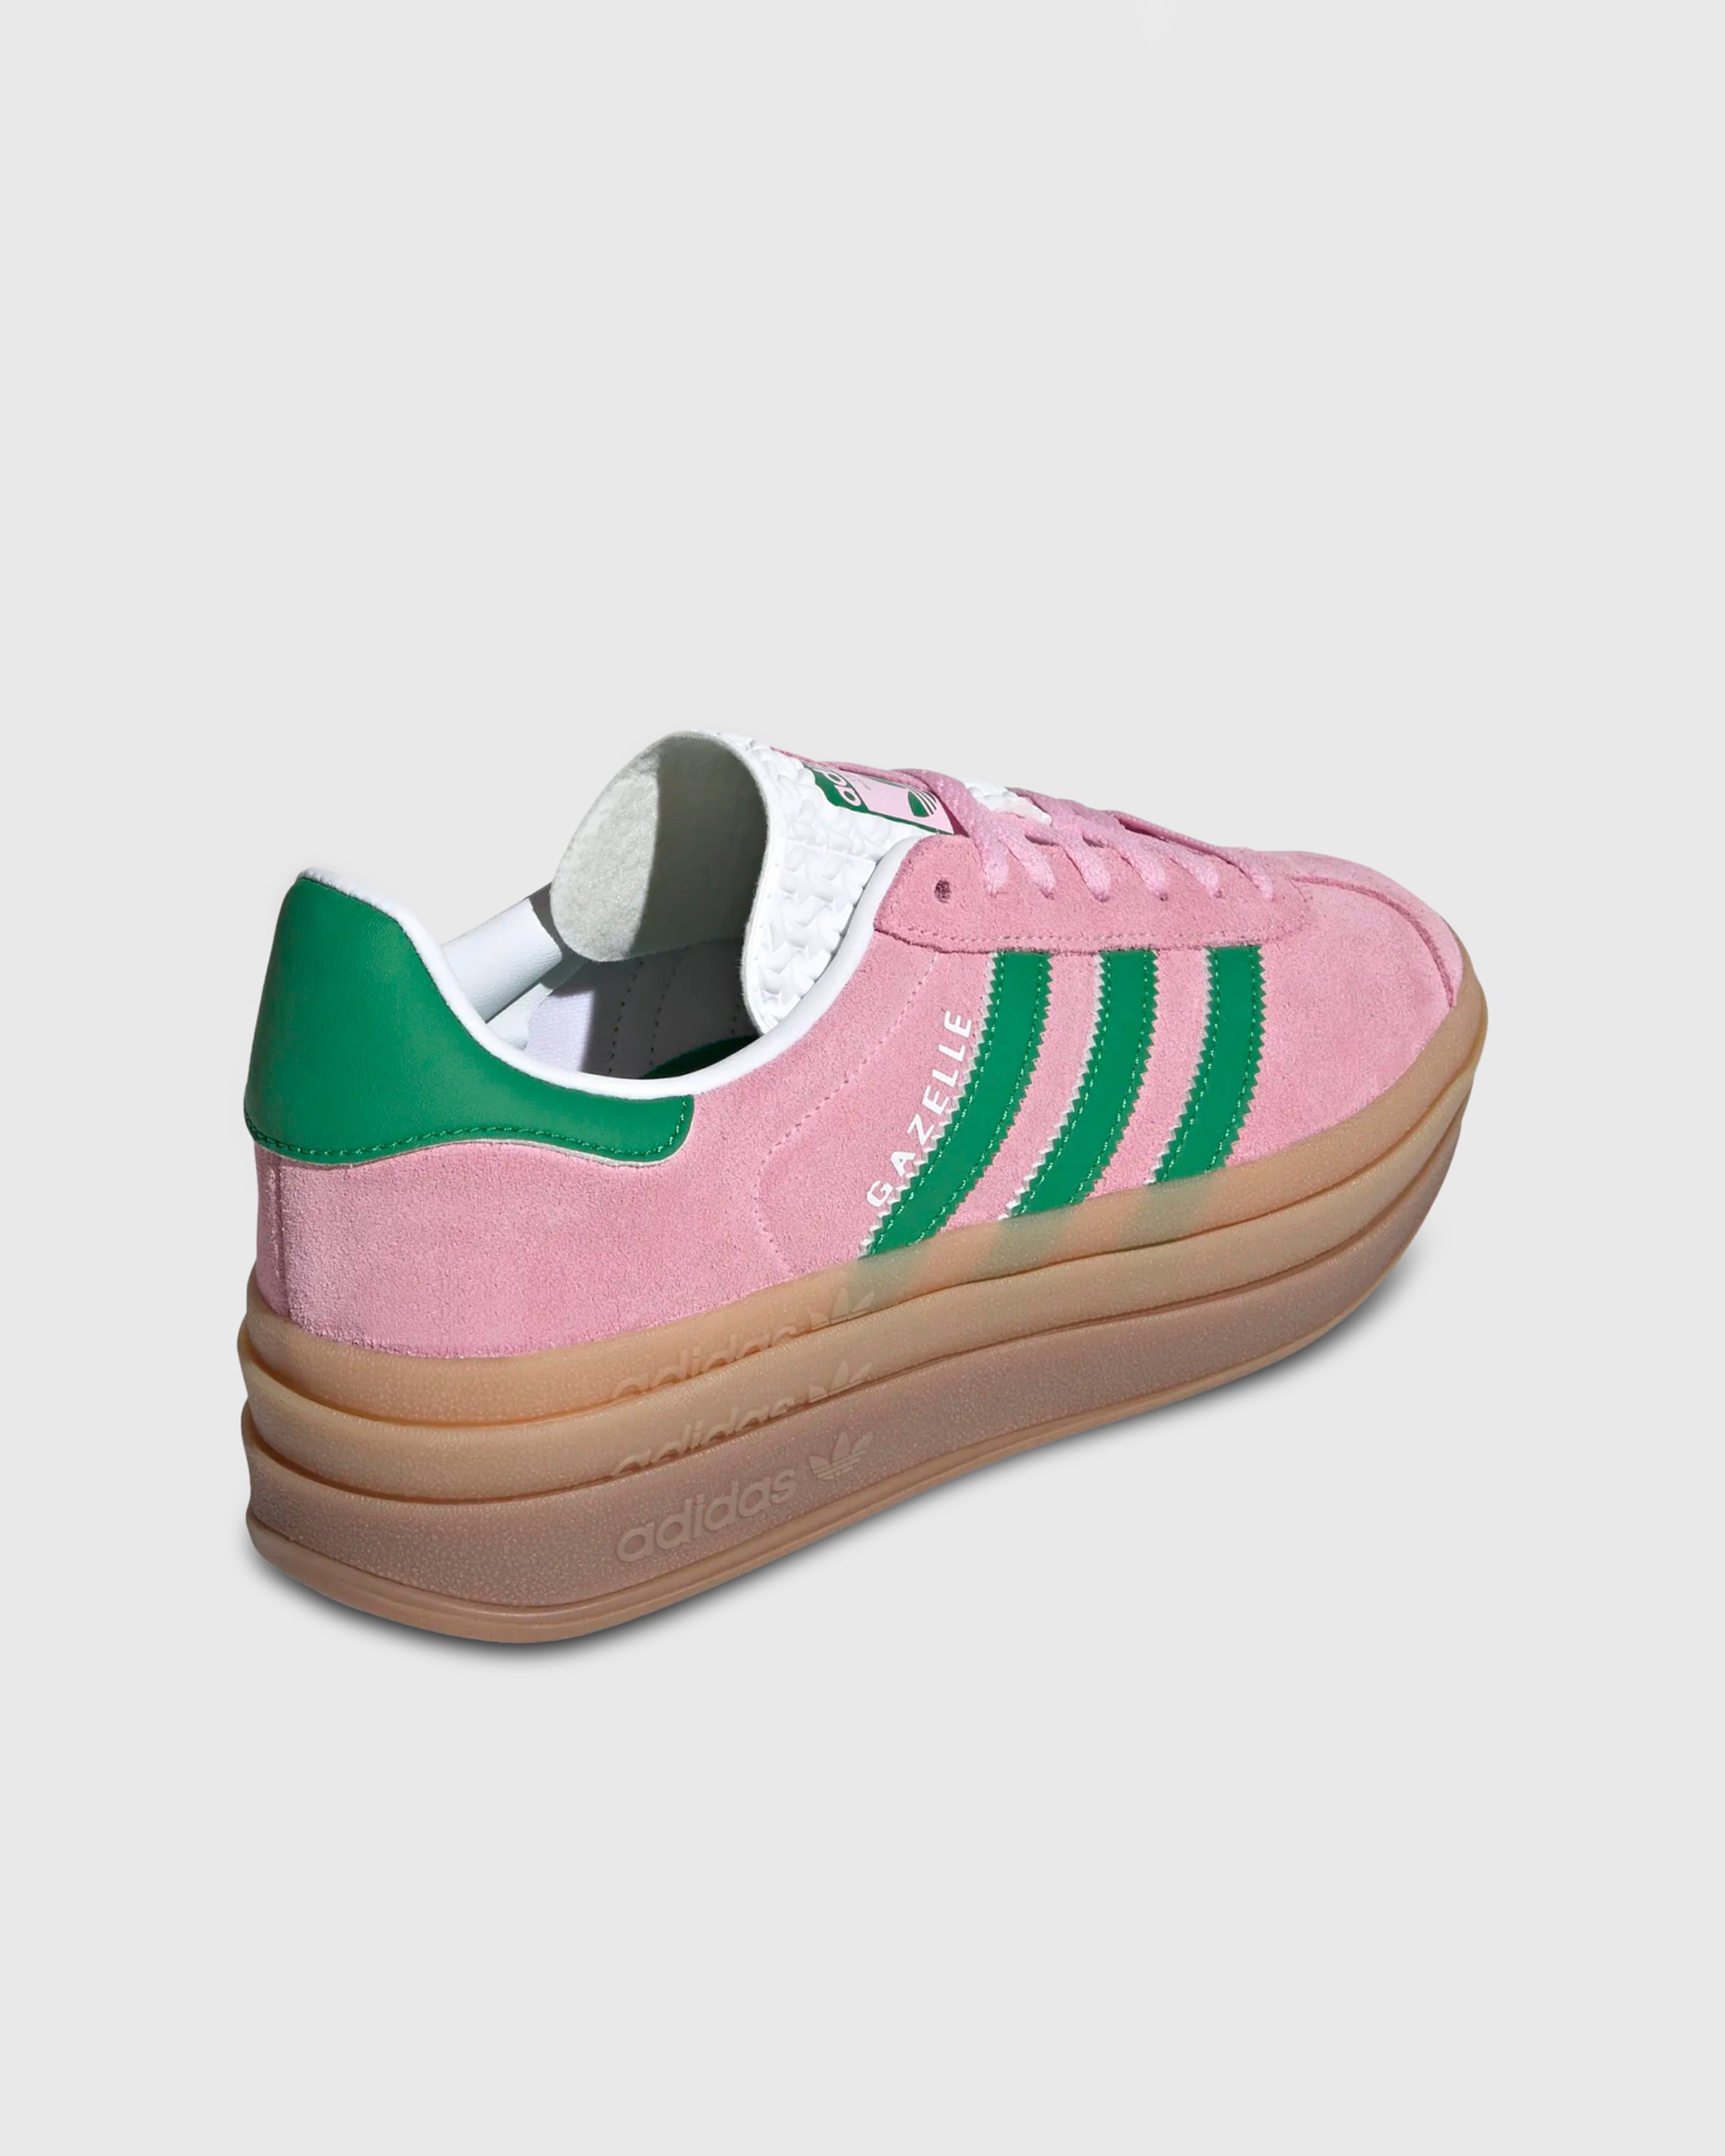 Adidas - GAZELLE BOLD W      TRUPNK/GREEN/FTWWHT - Footwear - Pink - Image 4